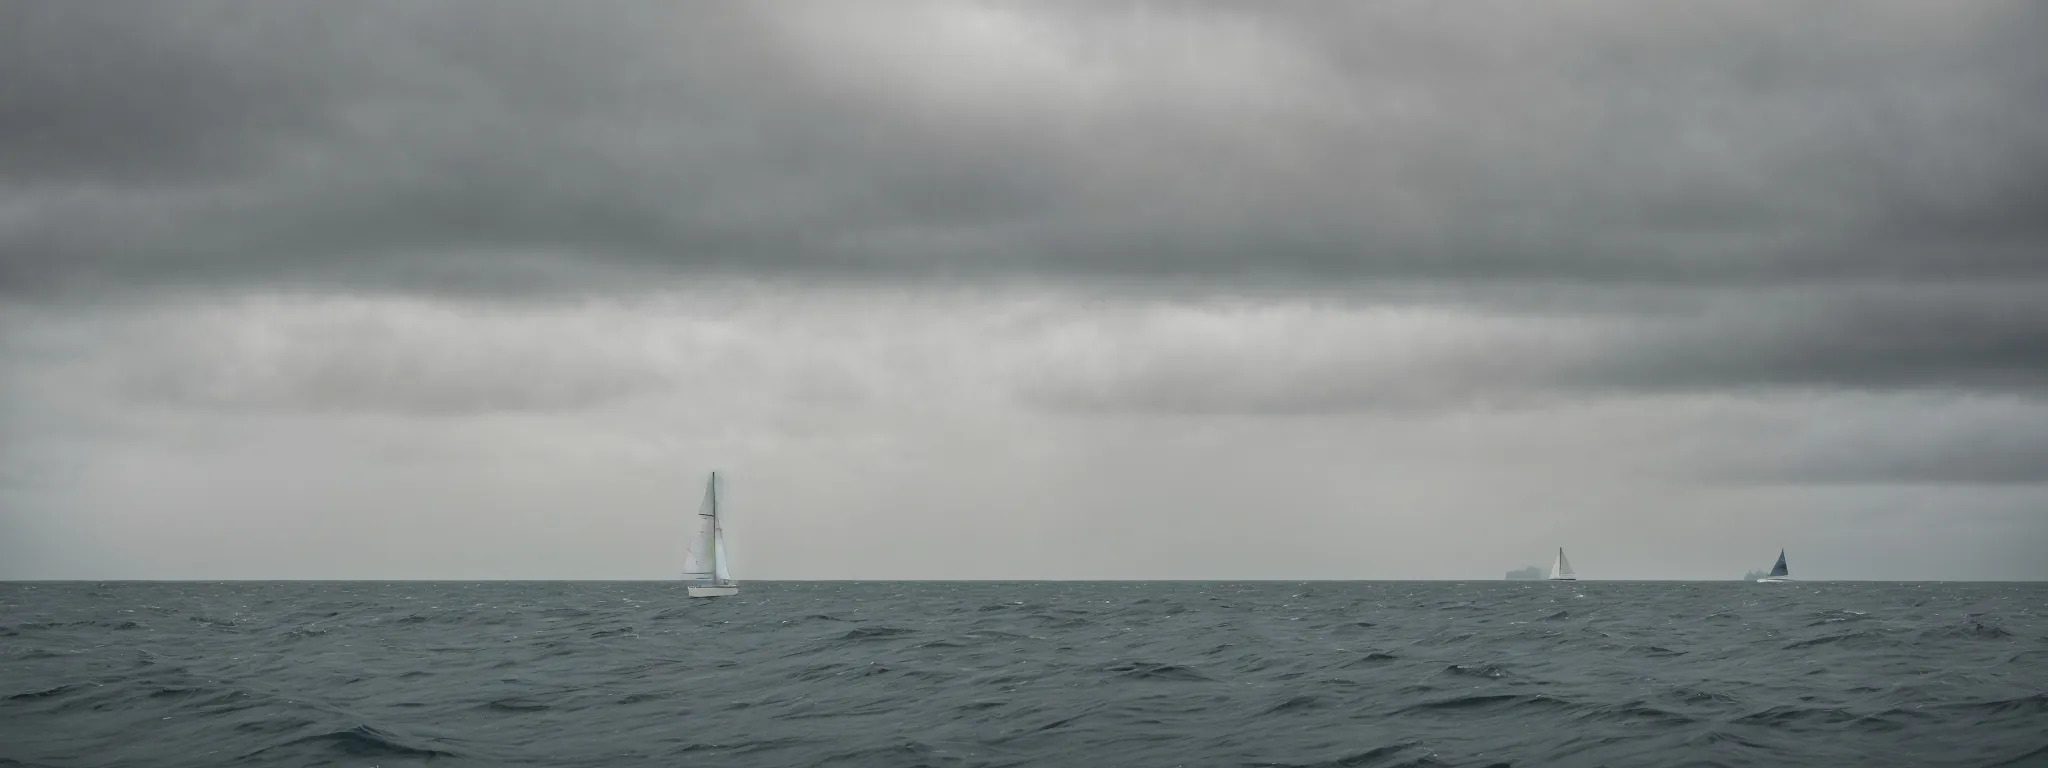 a lone sailboat aimlessly adrift in a vast, featureless ocean under a cloudy sky.